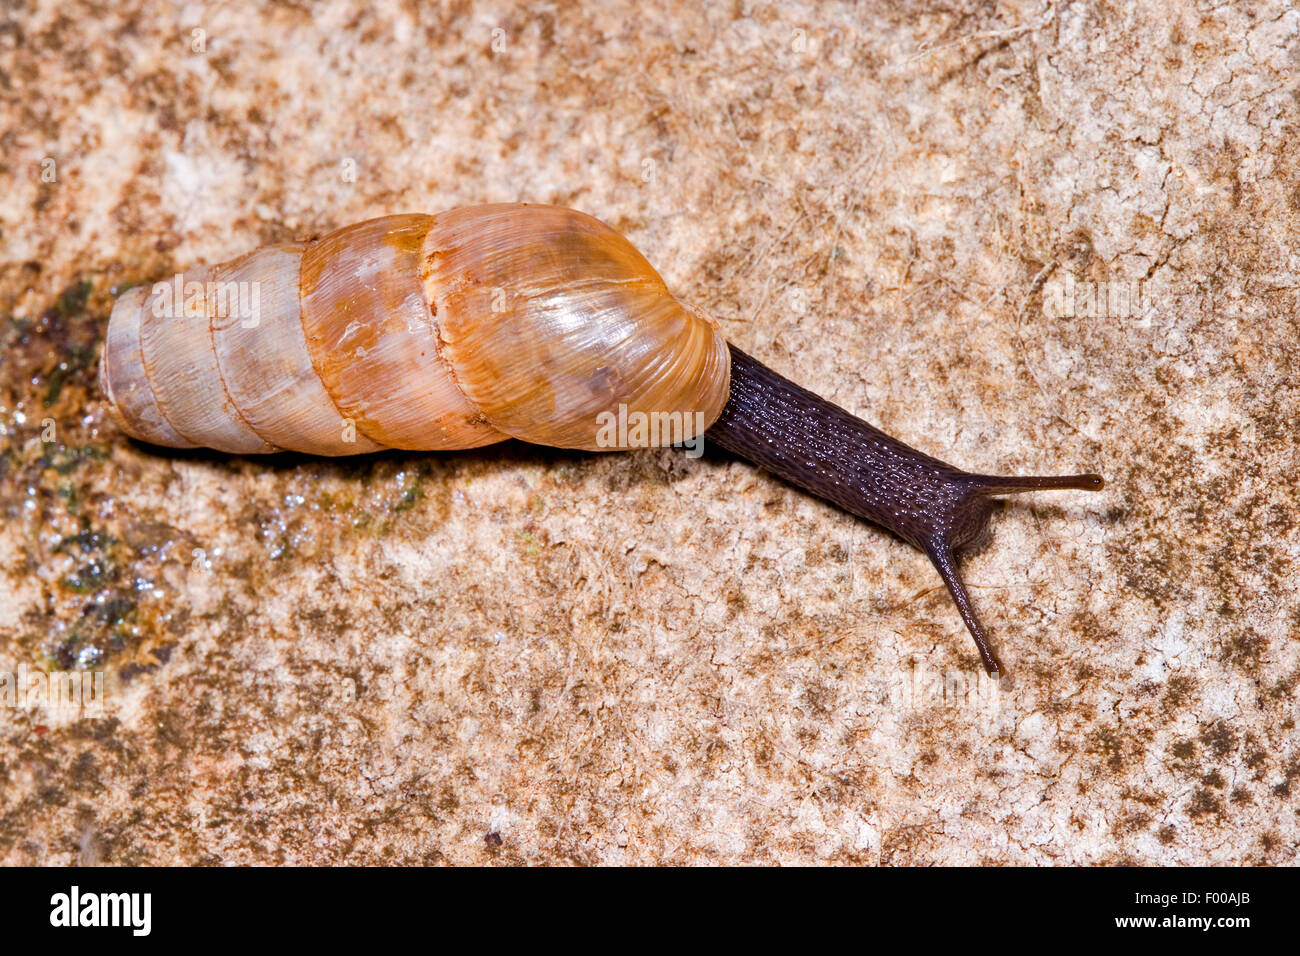 decollate snail (Rumina decollata), creeps on a stone, Germany Stock Photo